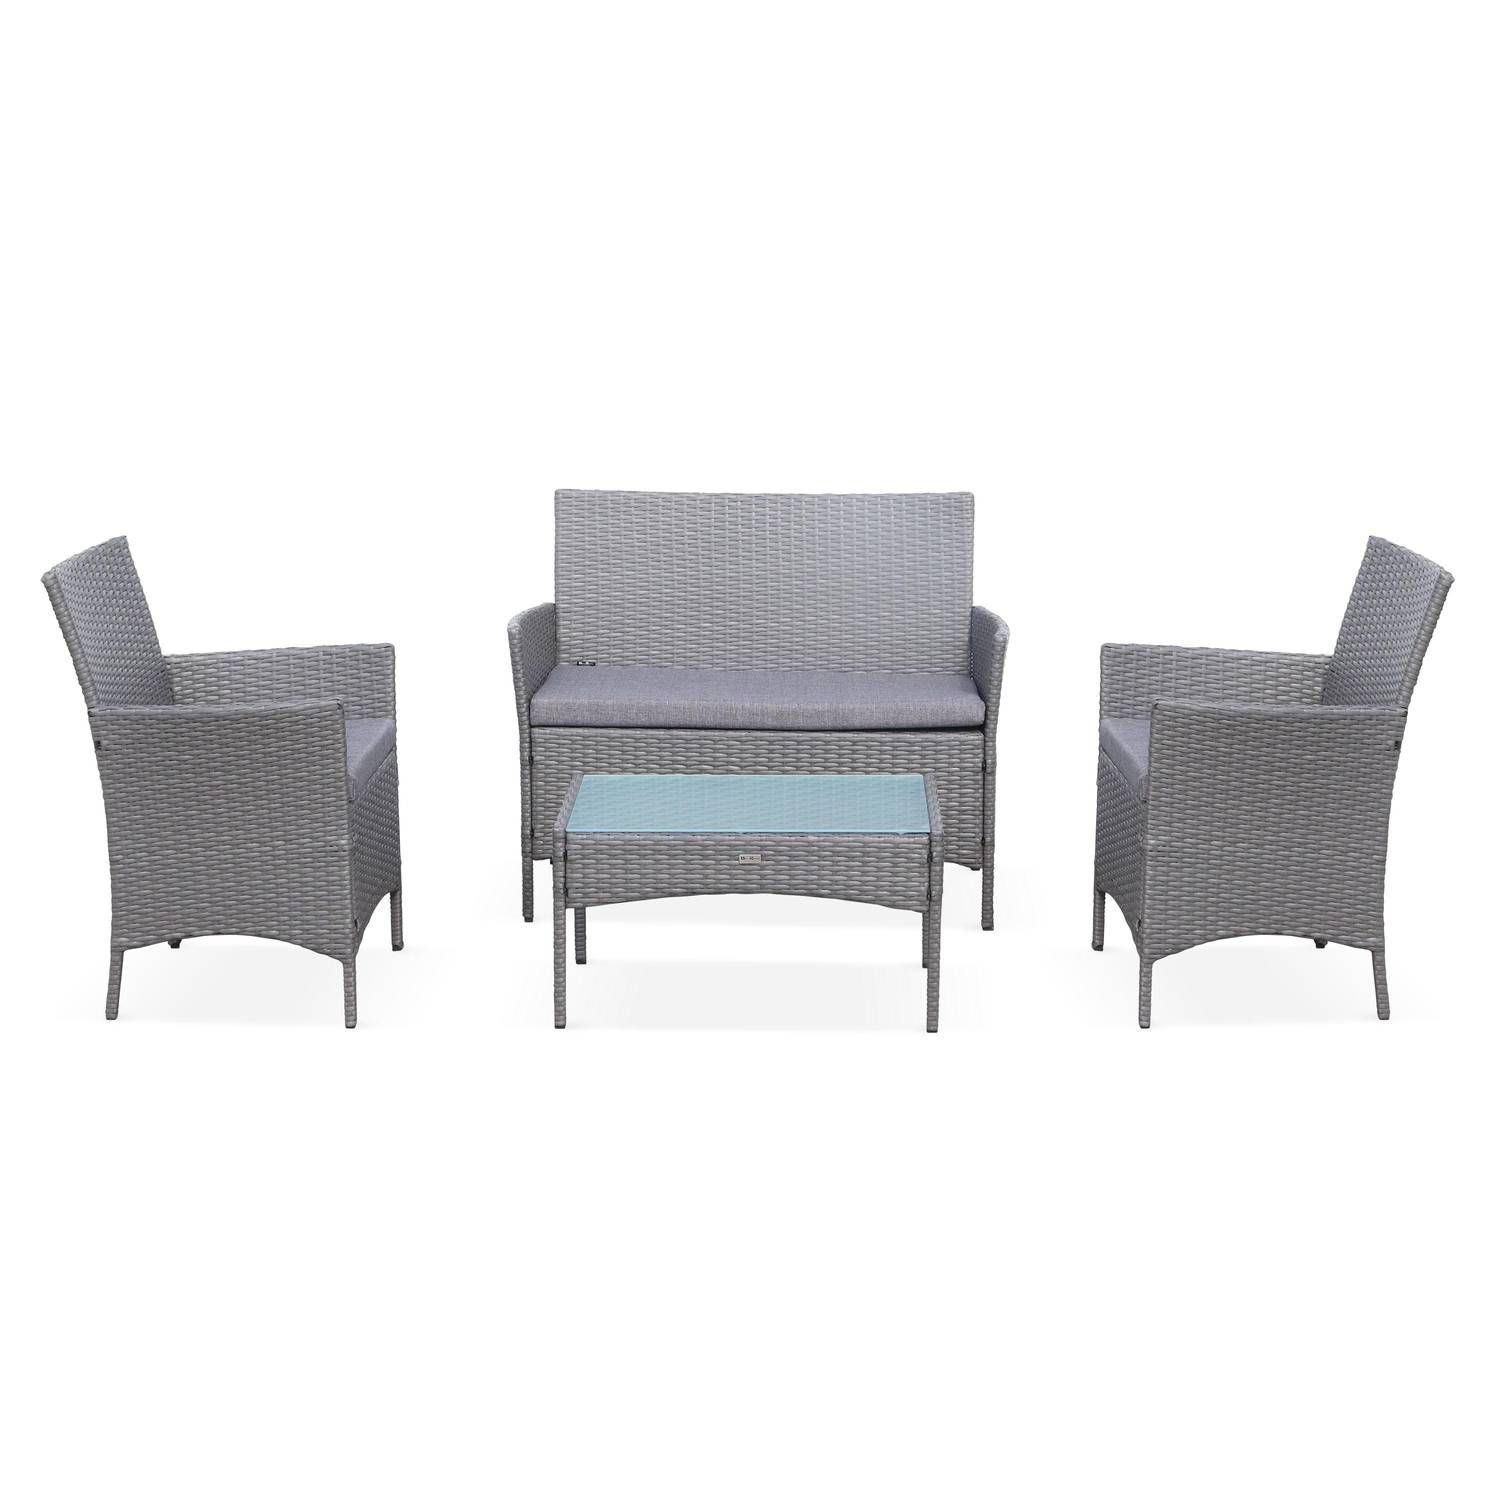 4-seater polyrattan garden sofa set - sofa, 2 armchairs, coffee table - Moltes - Grey rattan, Grey cushions Photo2